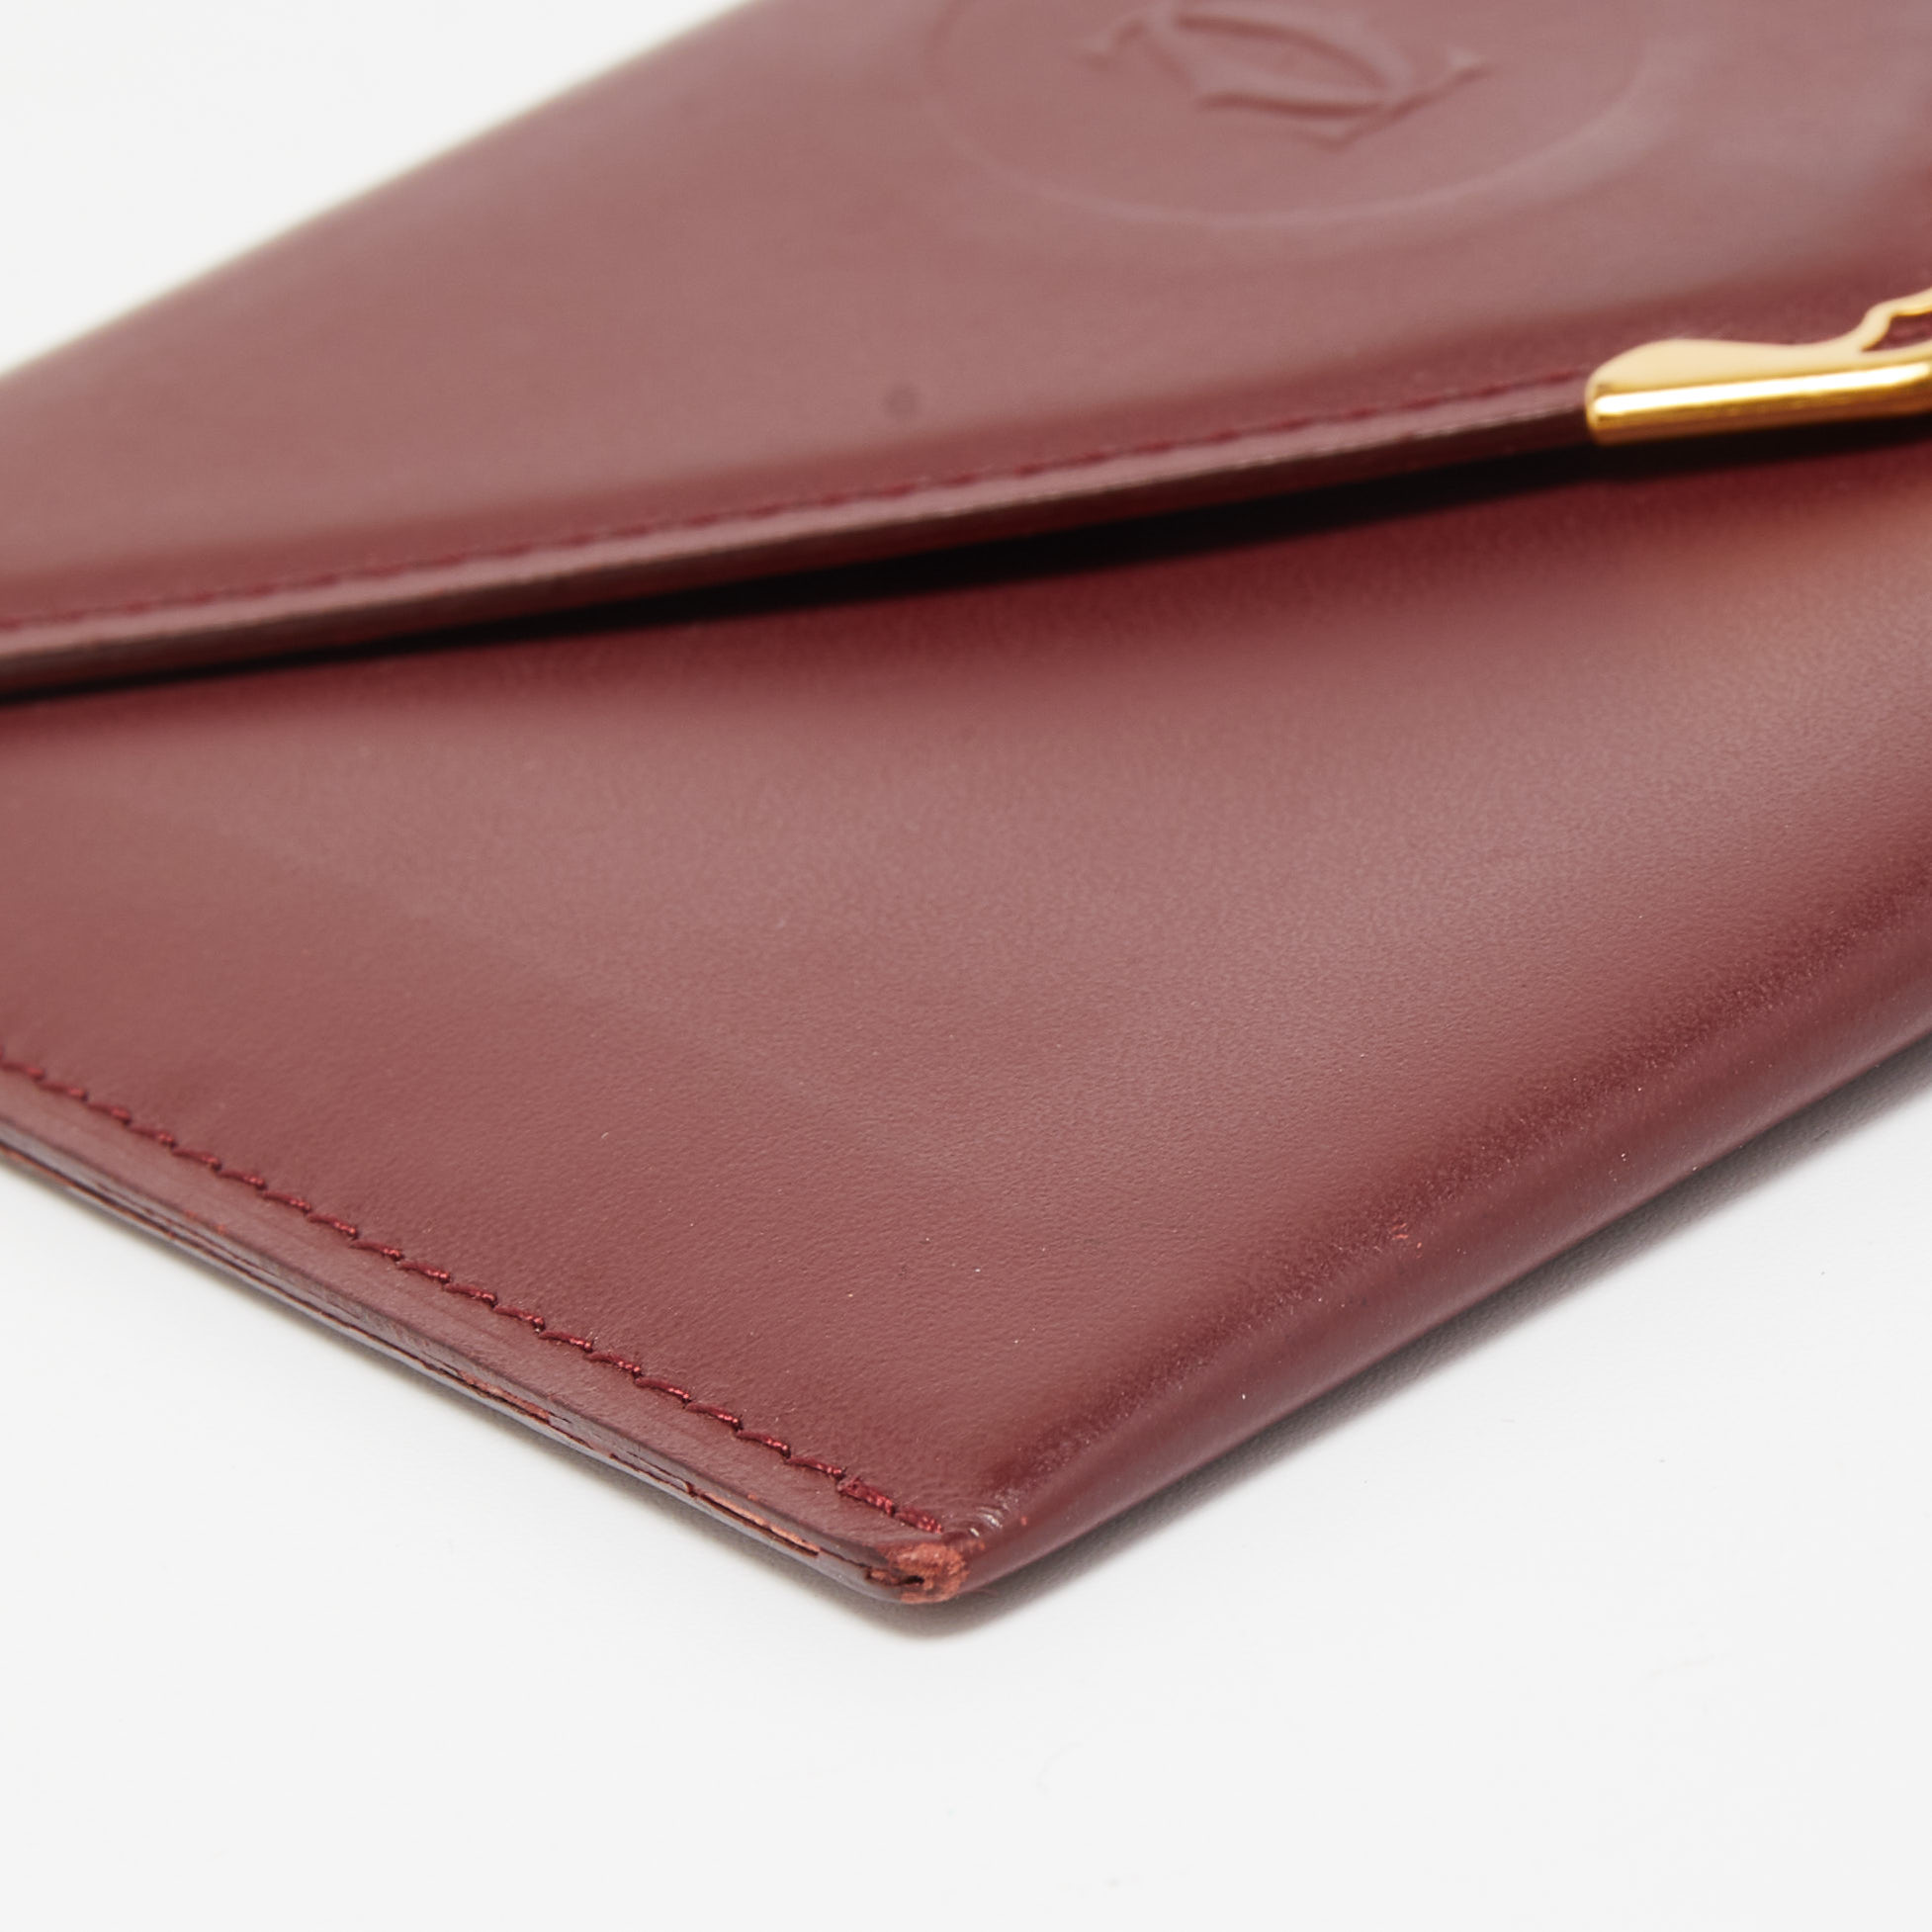 Cartier Burgundy Leather Must De Cartier Envelope Wallet